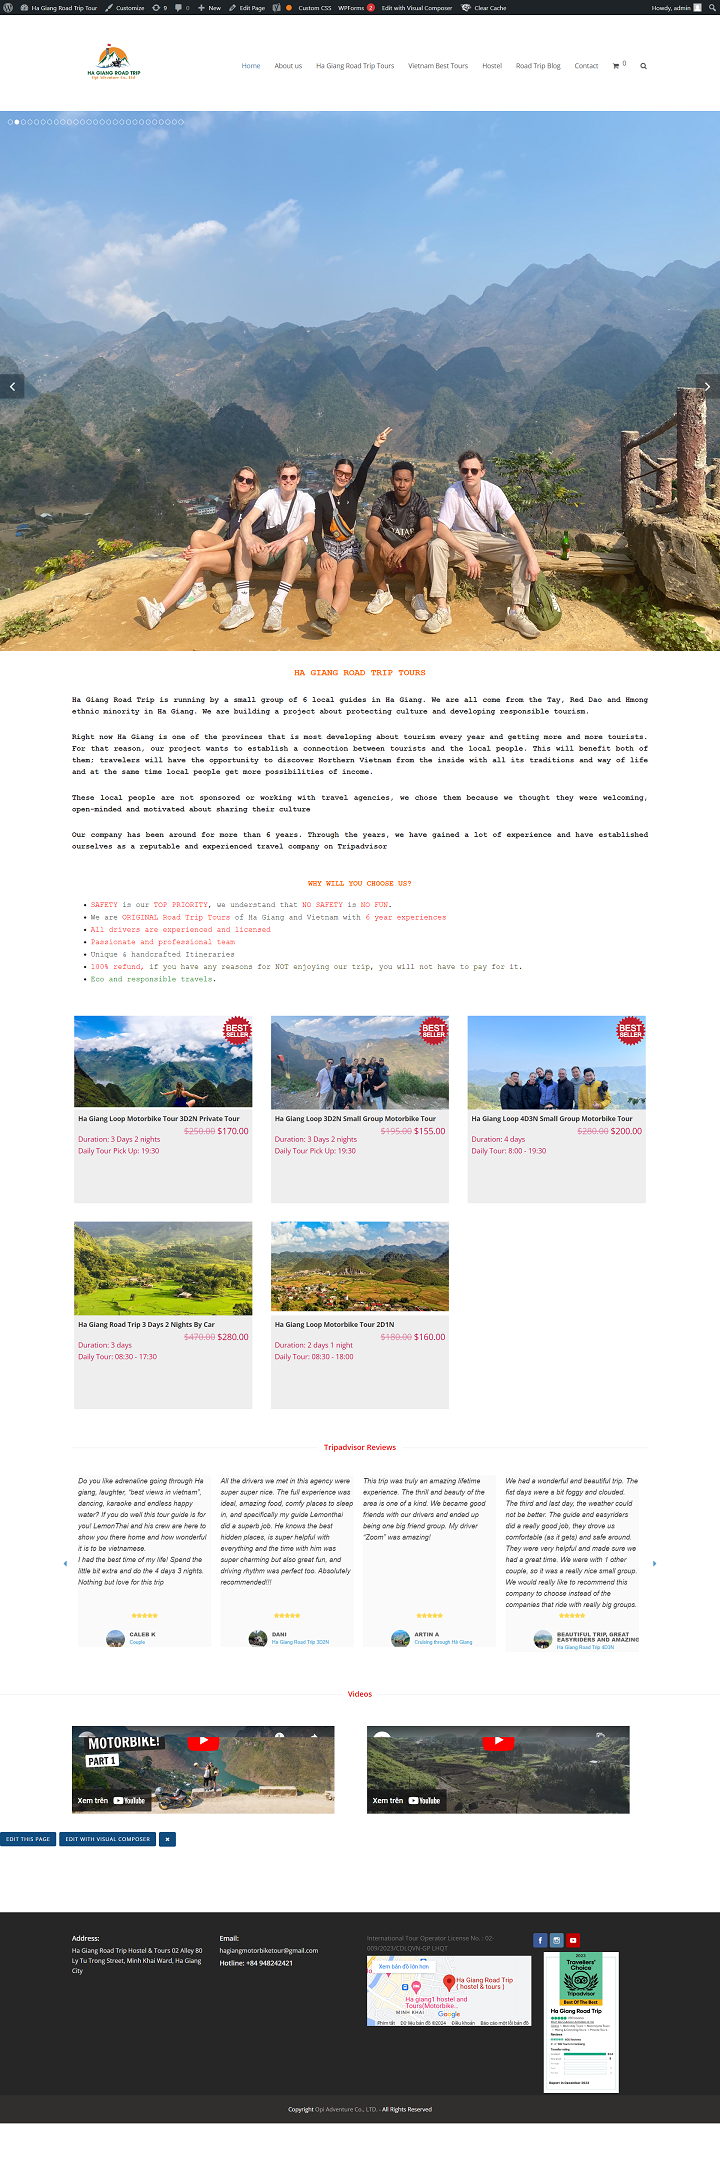 Website du lịch Hà Giang ROAD TRIP TOURS